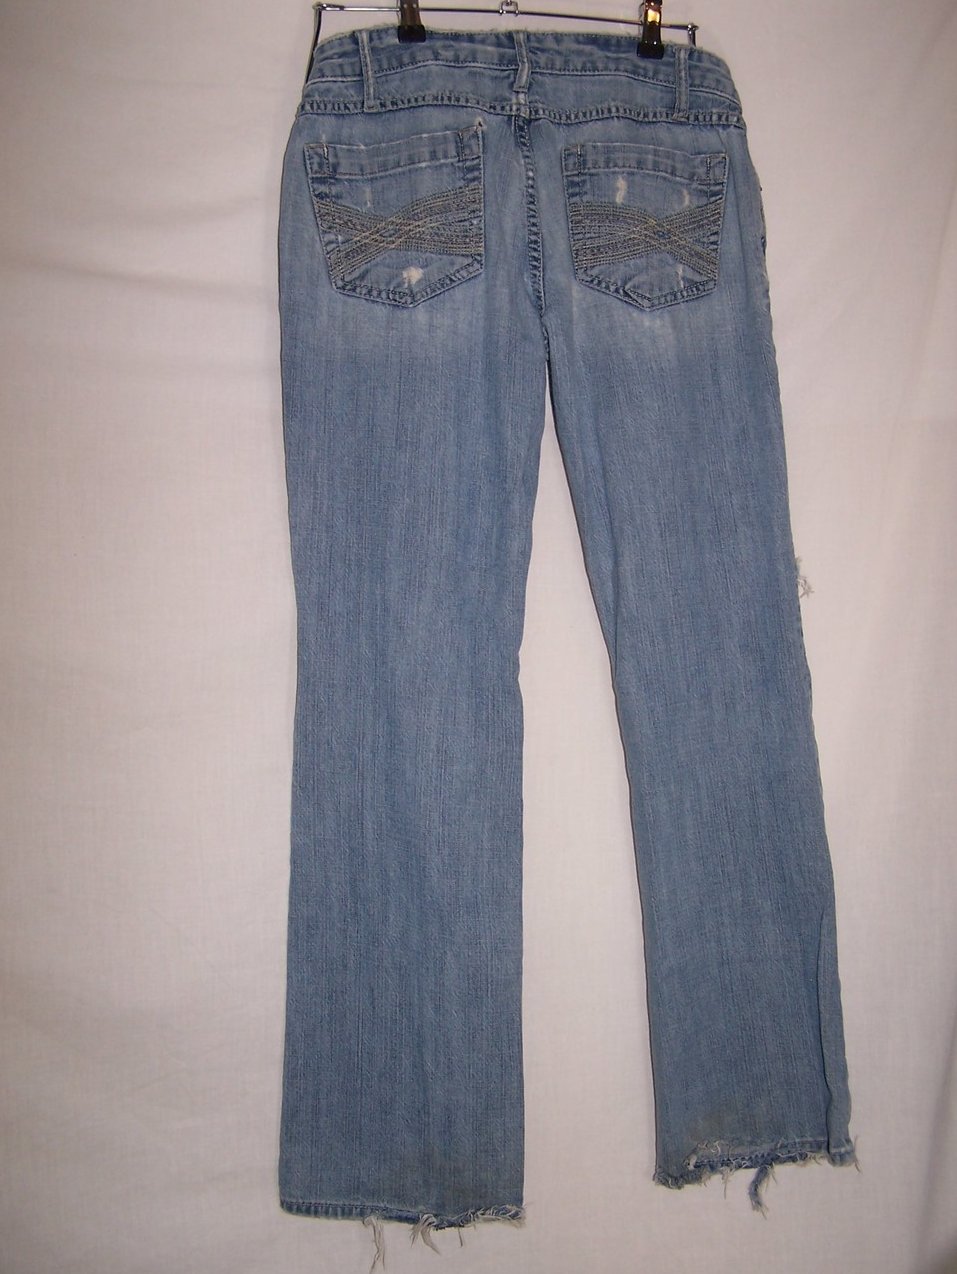 Image 2 of Jrs Sz 5, 6, Distressed Aeropostale Skinny Flare Jeans